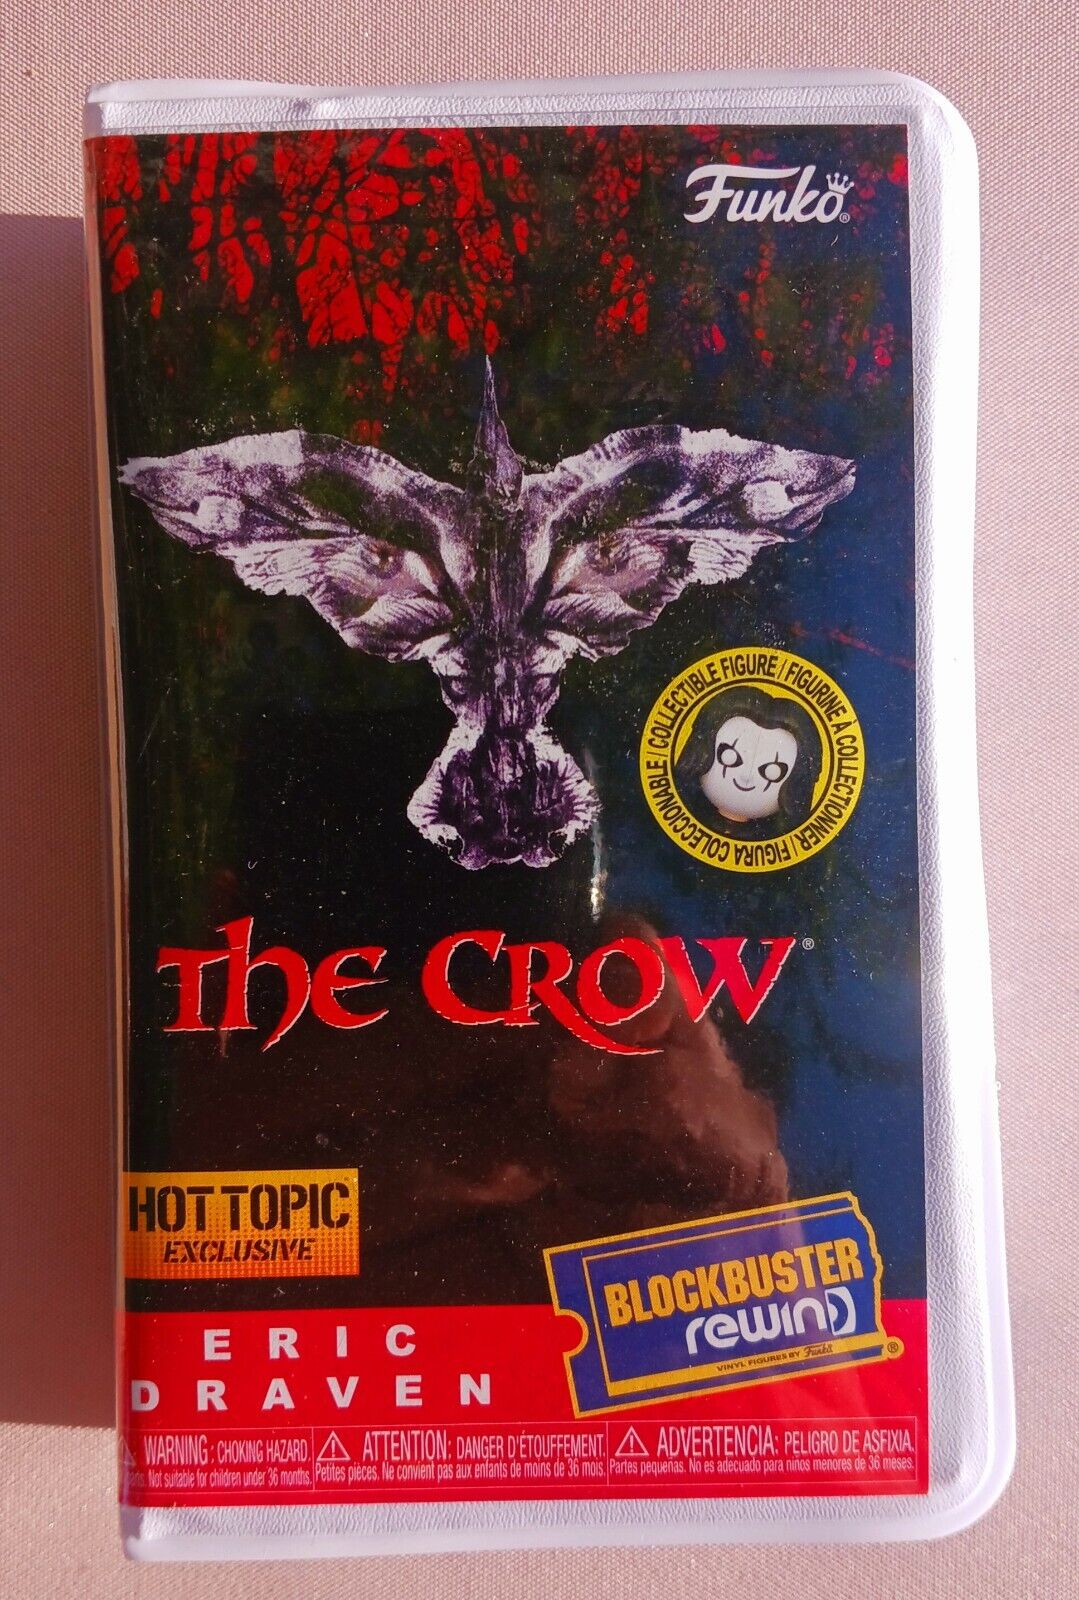 Funko x Blockbuster Rewind The Crow  Eric Draven Hot Topic Exclusive Common